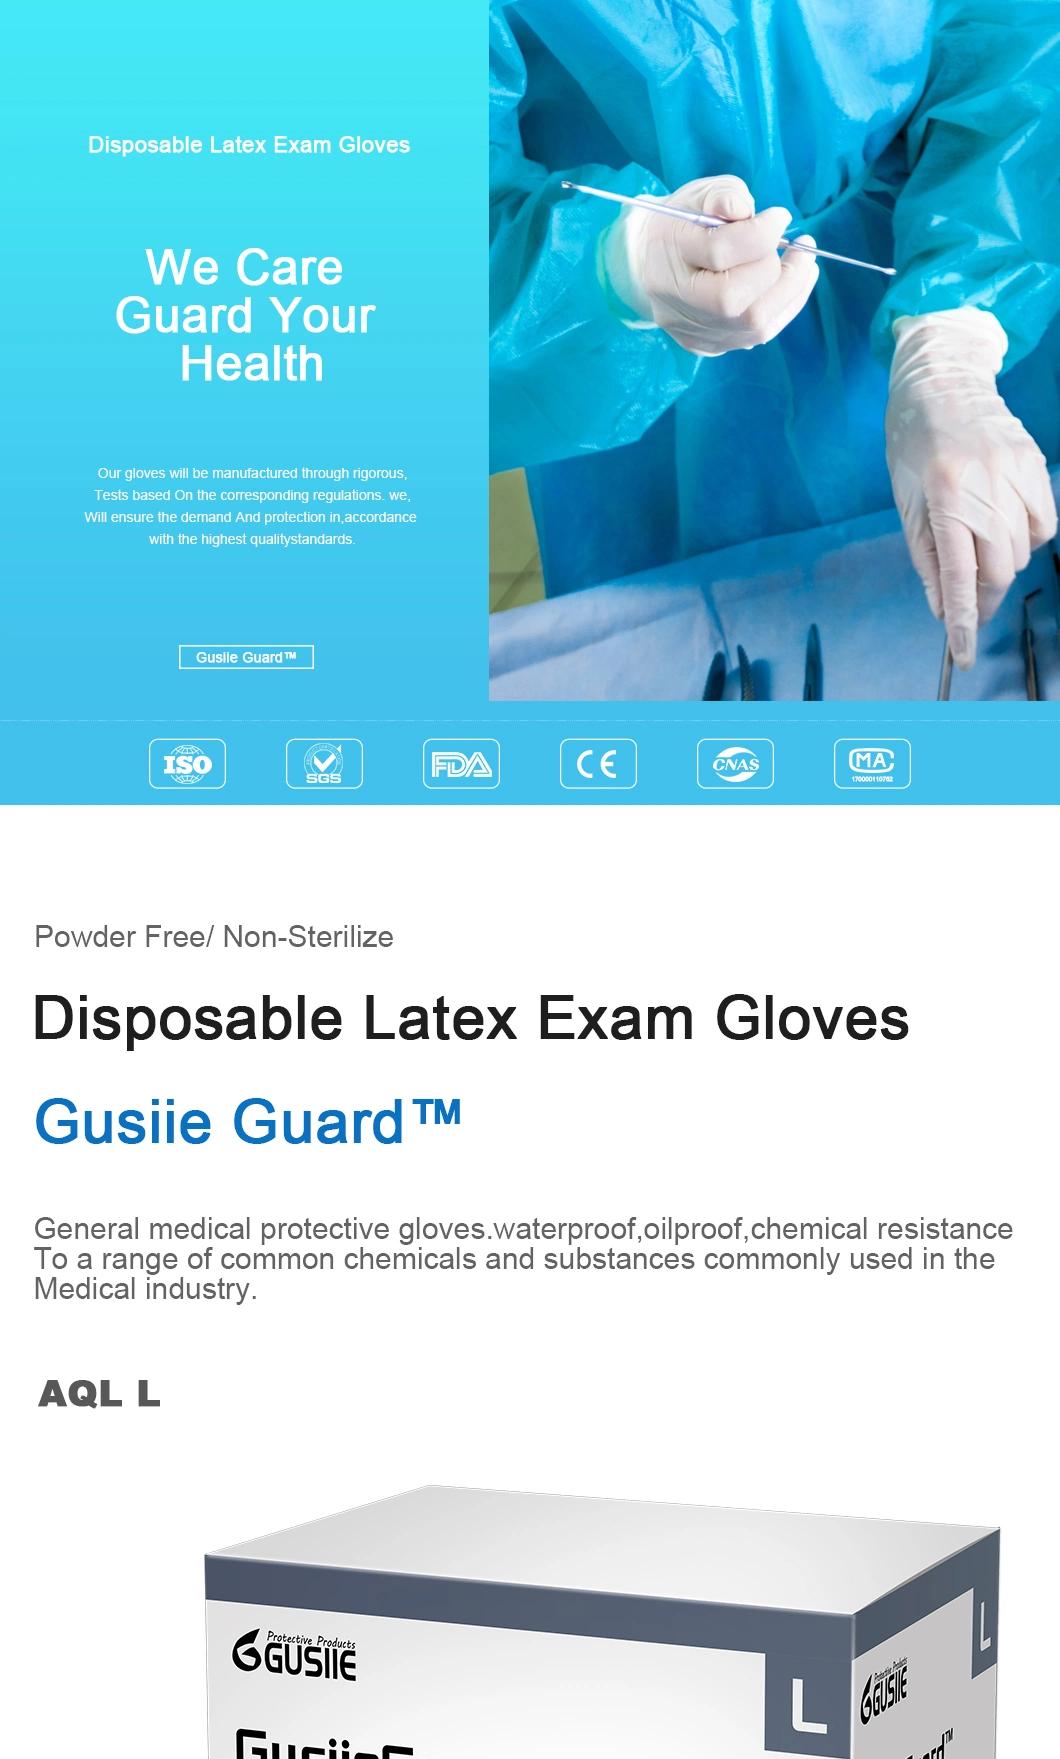 Wholesale Factory Disposable Medical Examination Natural Latex Environmentally Friendly Large Gloves